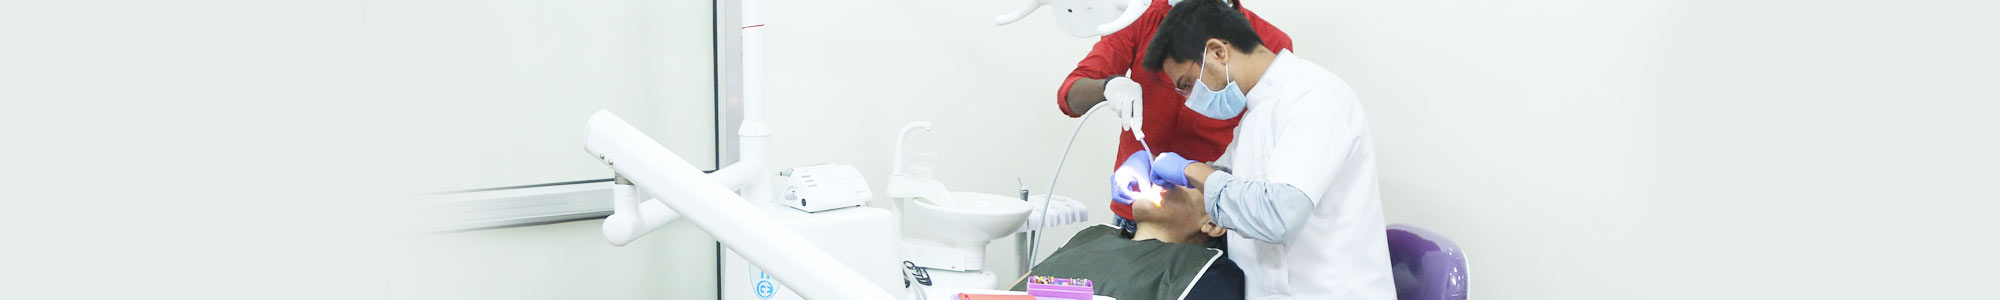 Root Canal Treatment, Orthodontic Treatment, Dental Implants, Pediatric Dentistry